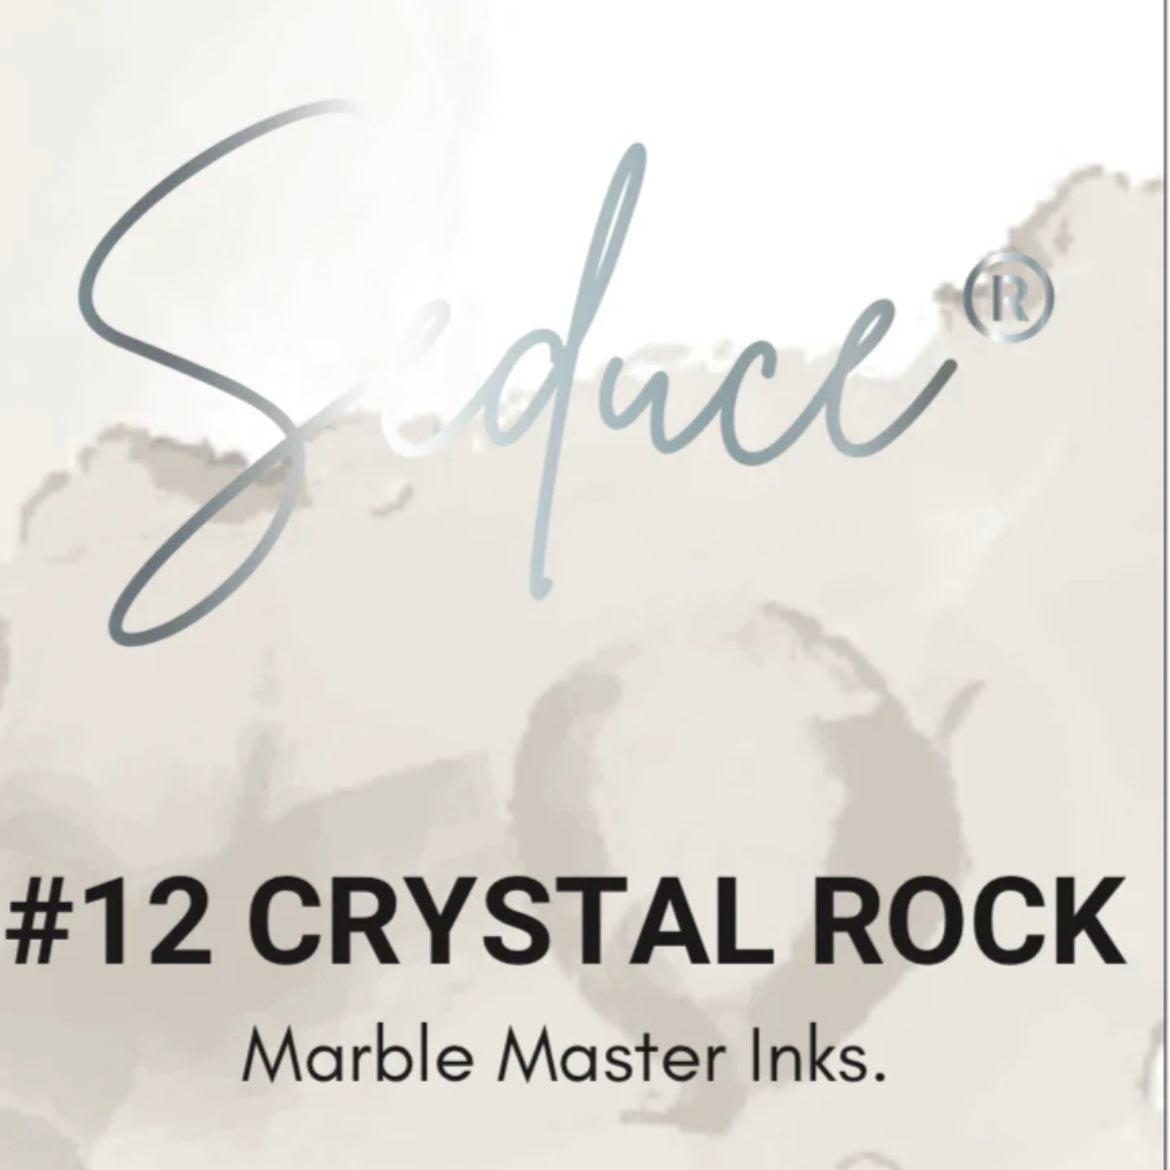 Marble Master Inks - #12 Crystal Rock